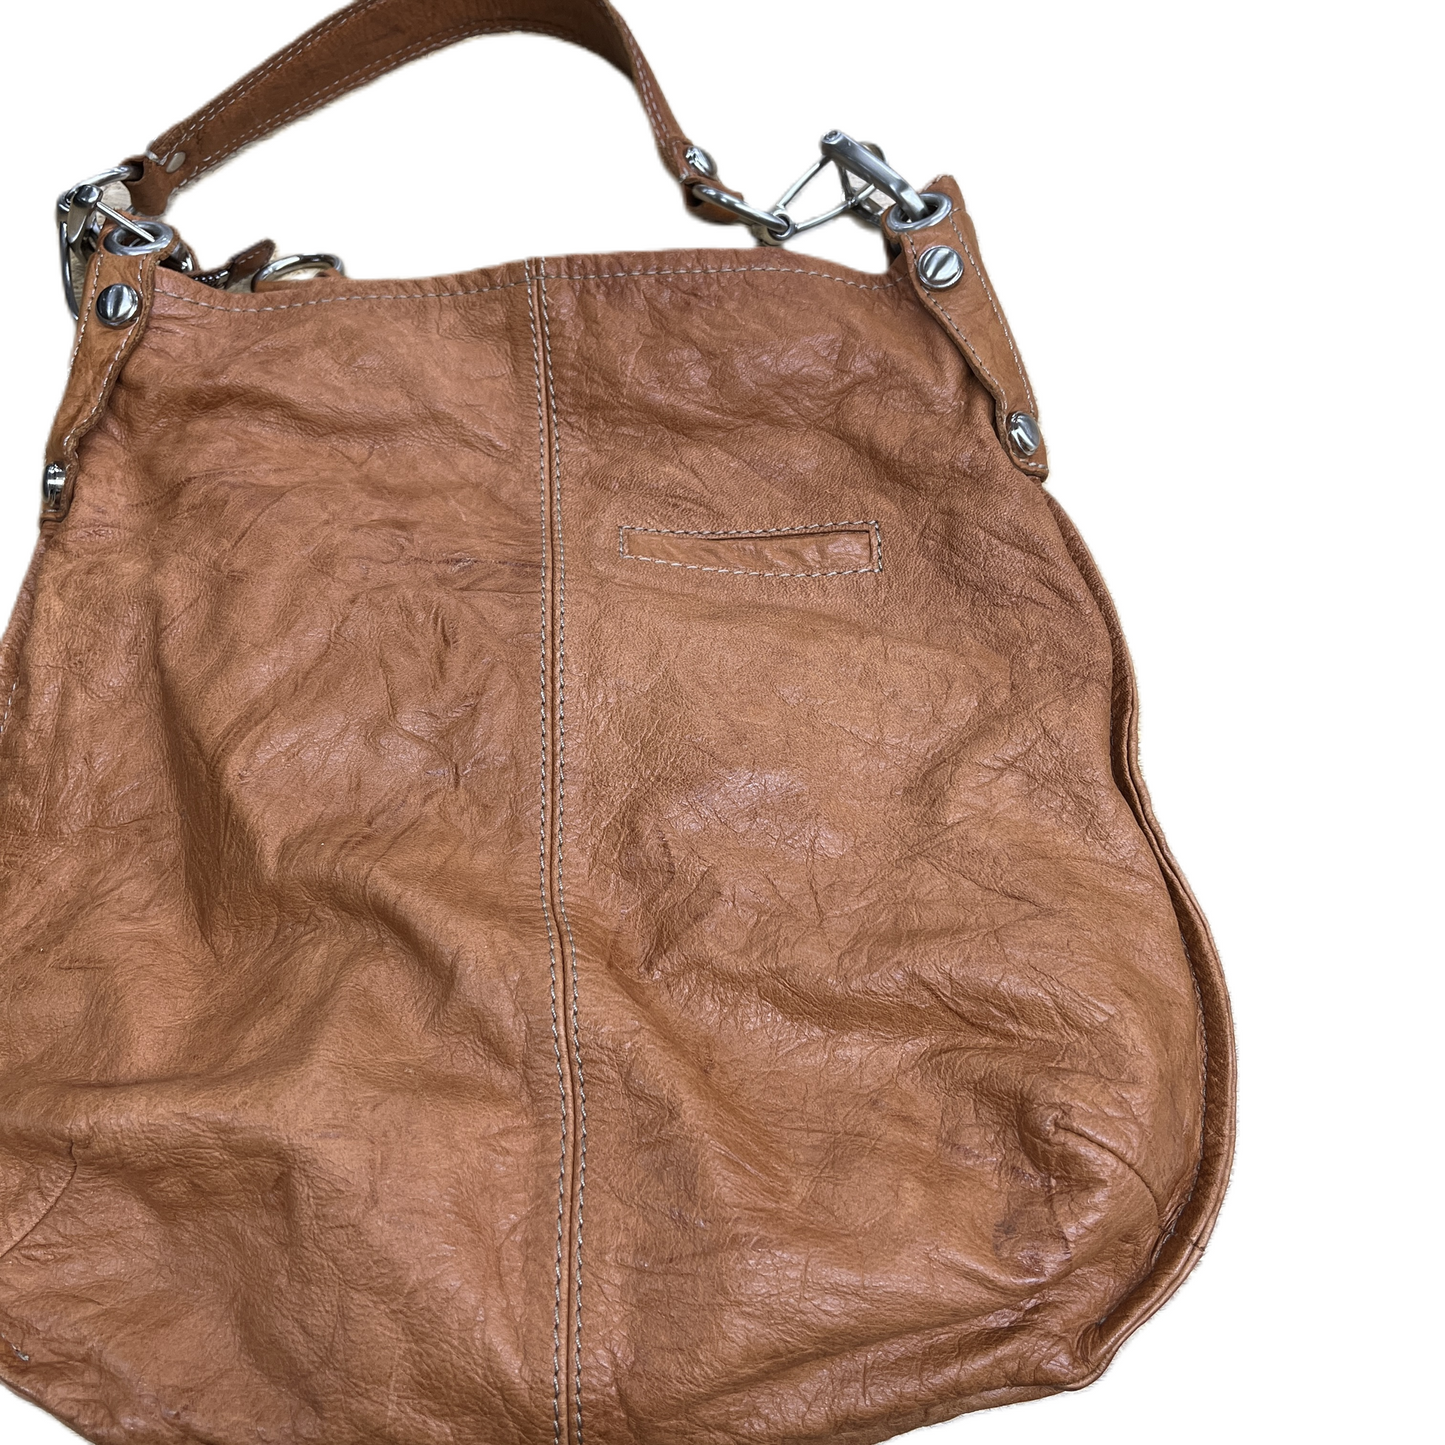 Handbag Leather By B. Makowsky  Size: Large